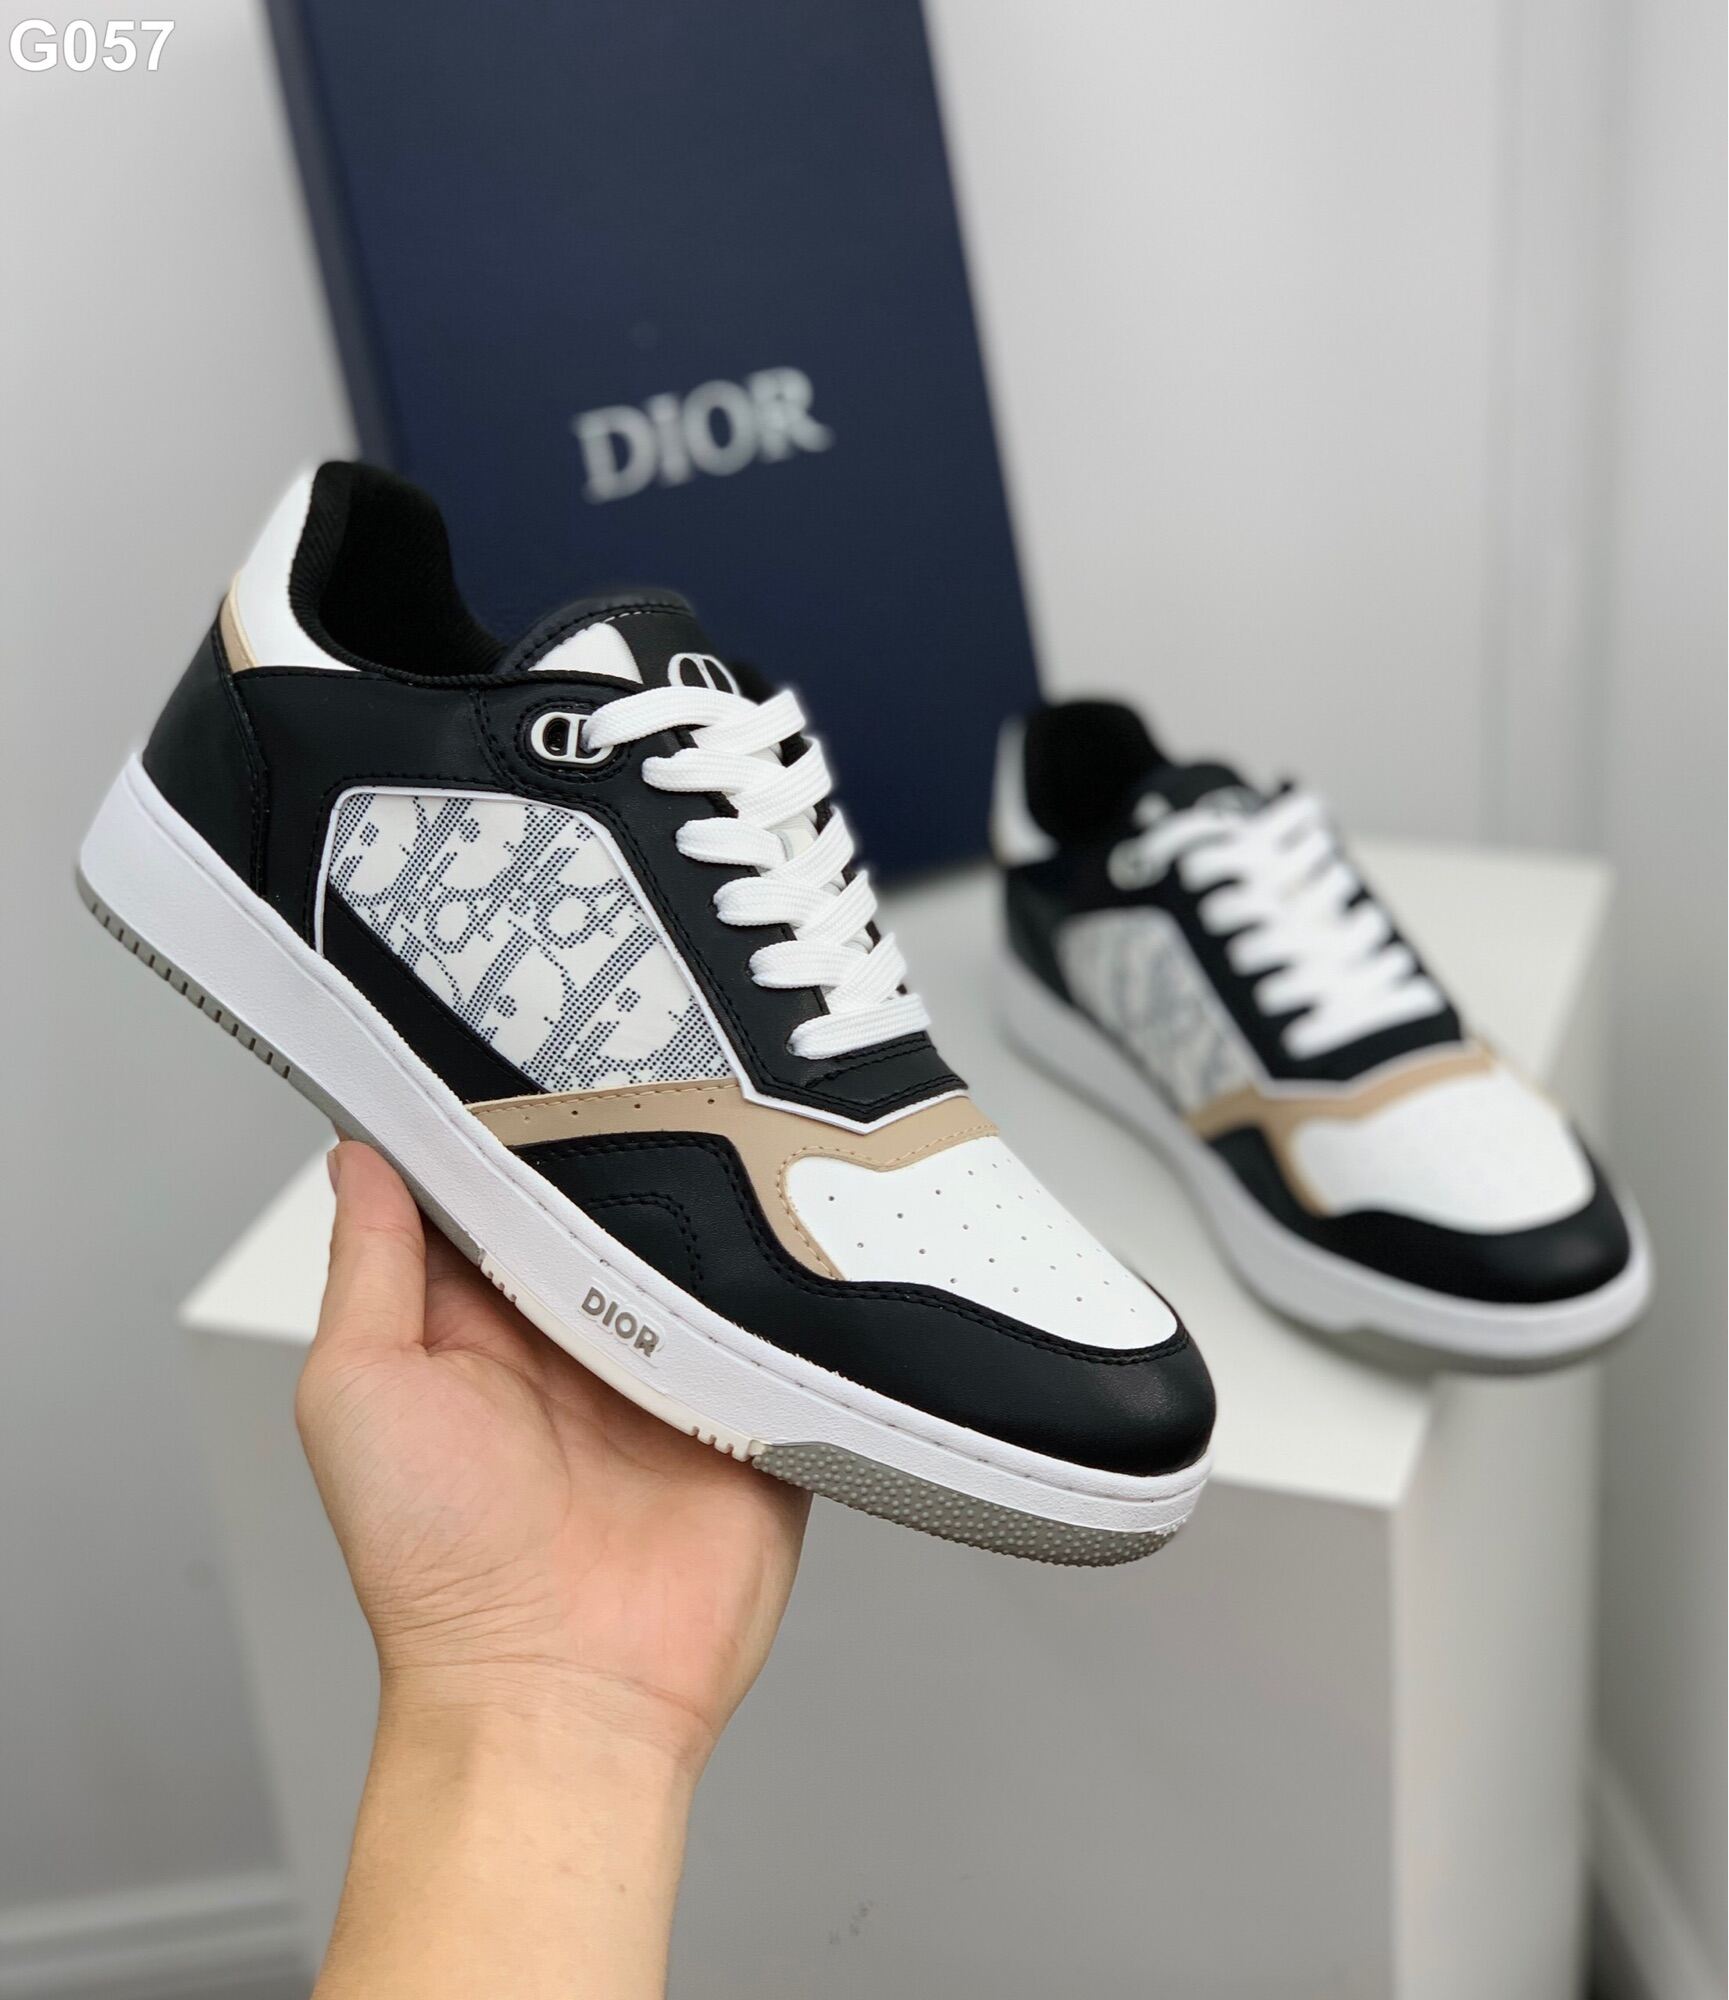 Giày Dior B27 Low Top màu Light Blue and White Gray họa tiết Dior Oblique  nền vải Jacquard Like Auth  Shop giày Replica